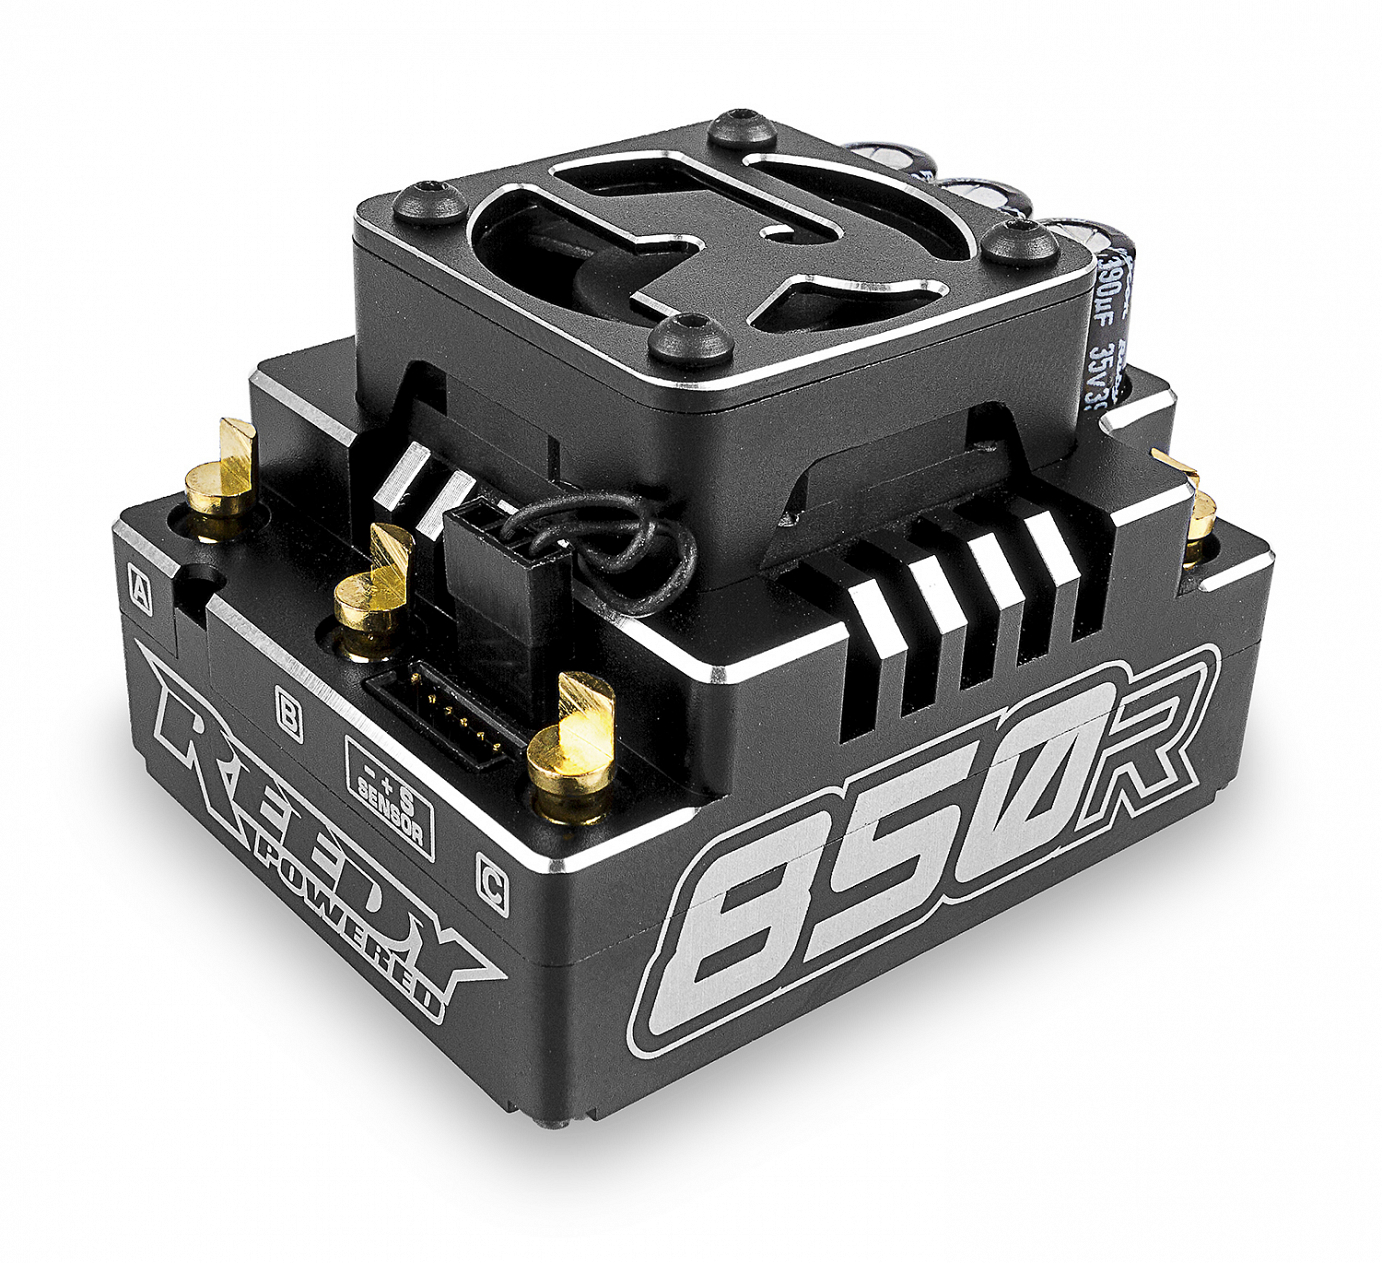 Reedy Blackbox 850R Sensored Competition 1:8 ESC